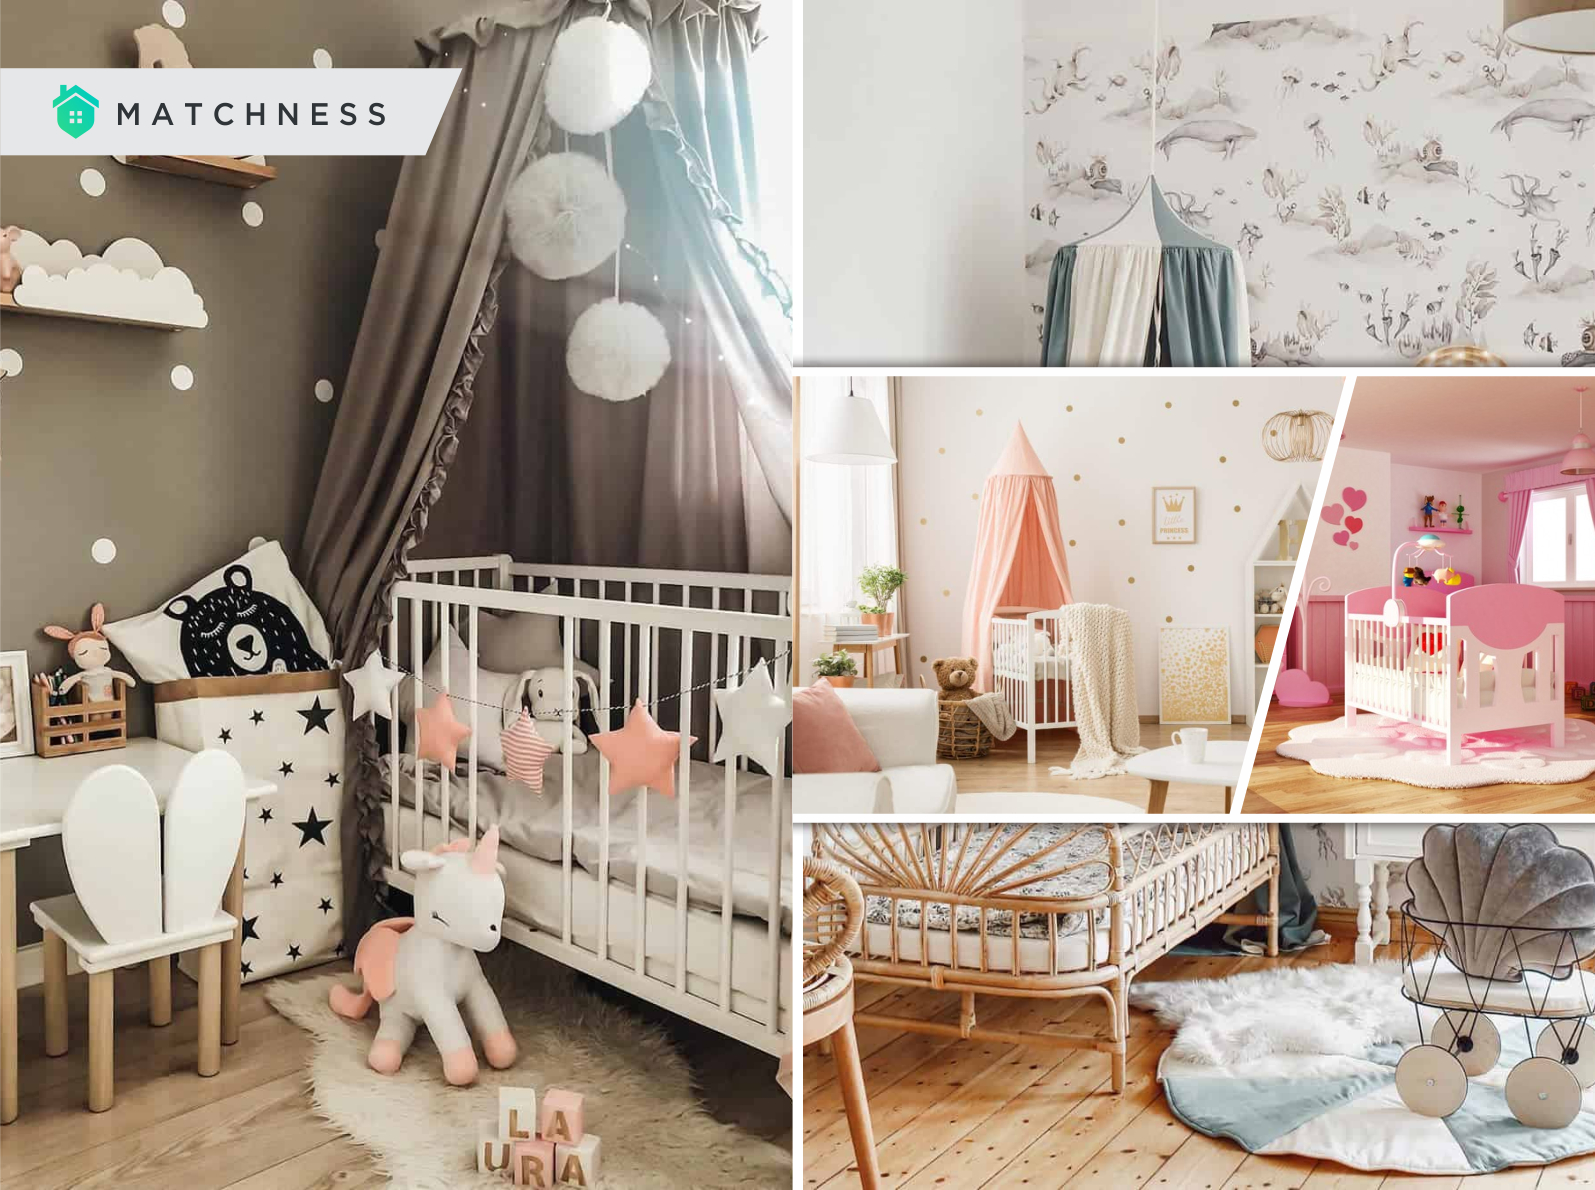 20 Simple Yet Calming Nursery Room Decorations - Matchness.com